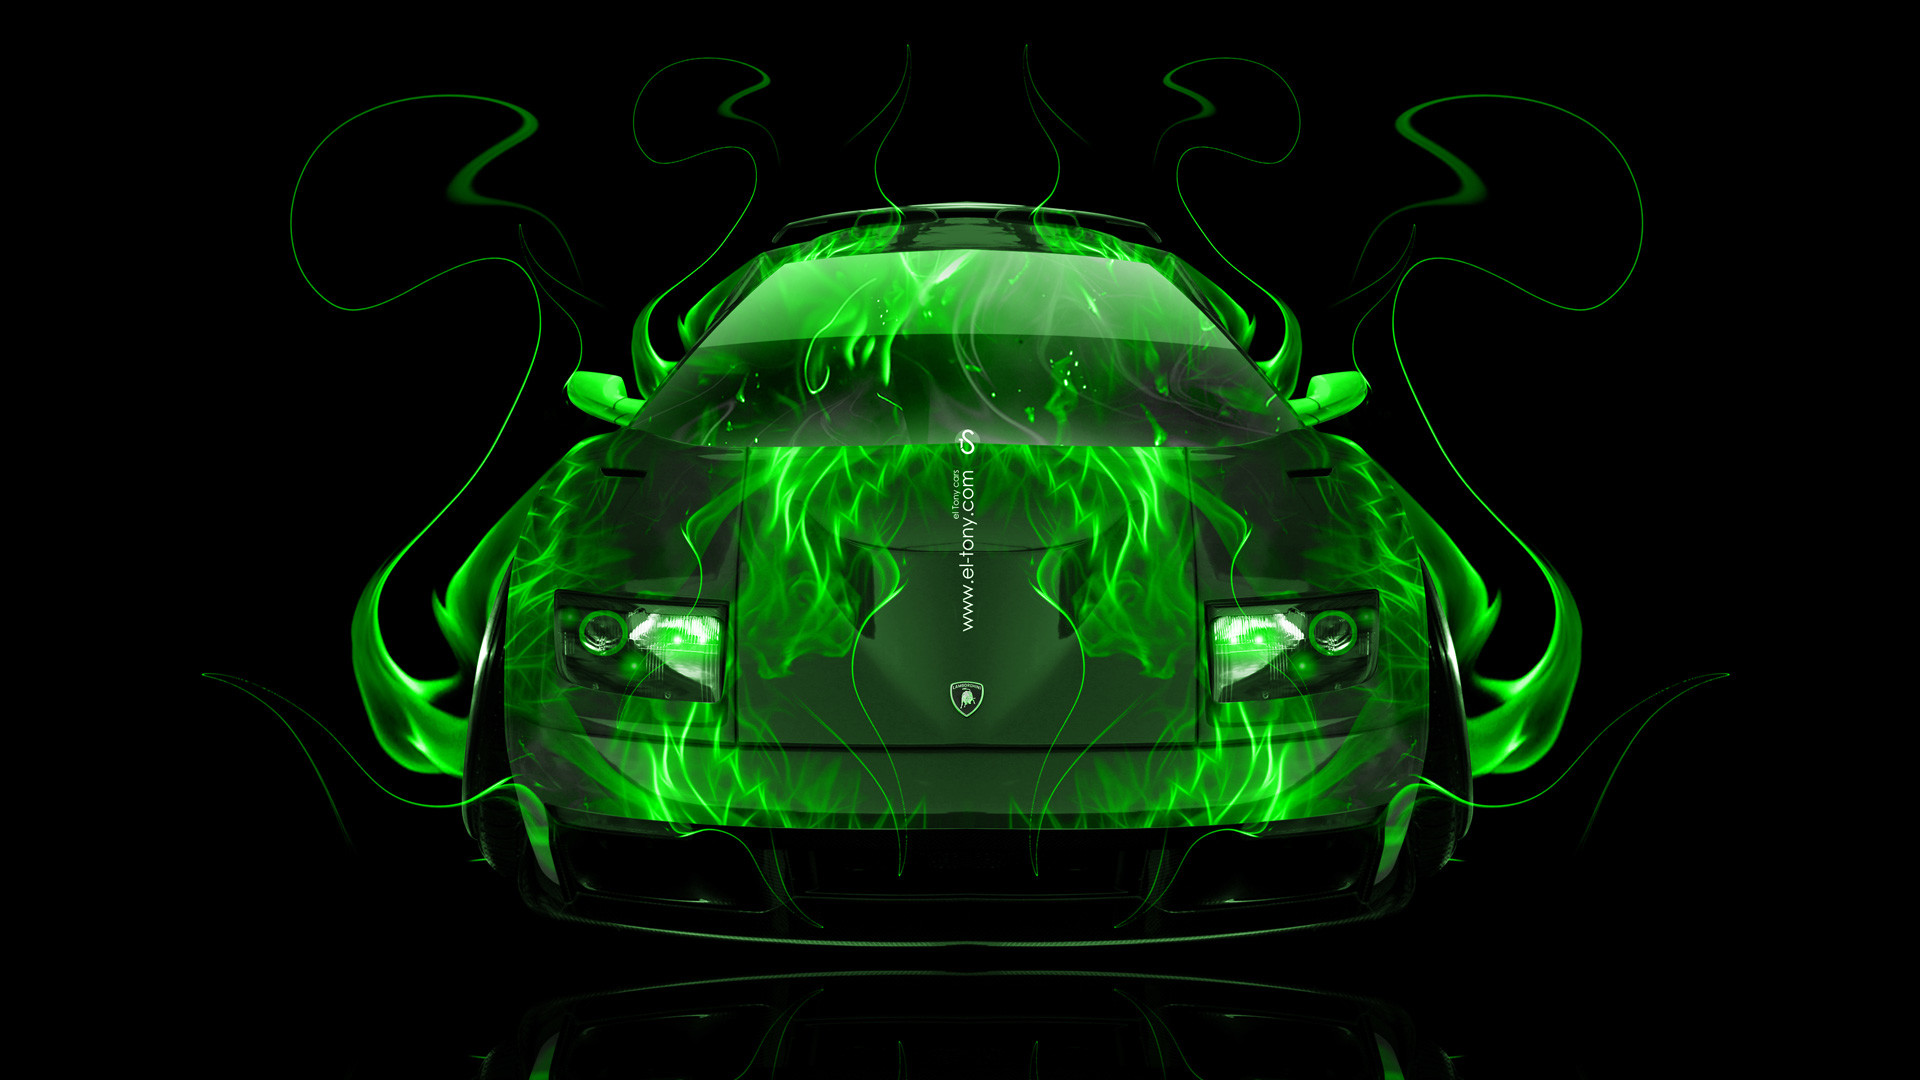 1920x1080 ... Lamborghini-Diablo-FrontUp-Green-Fire-Abstract-Car-2014- ...